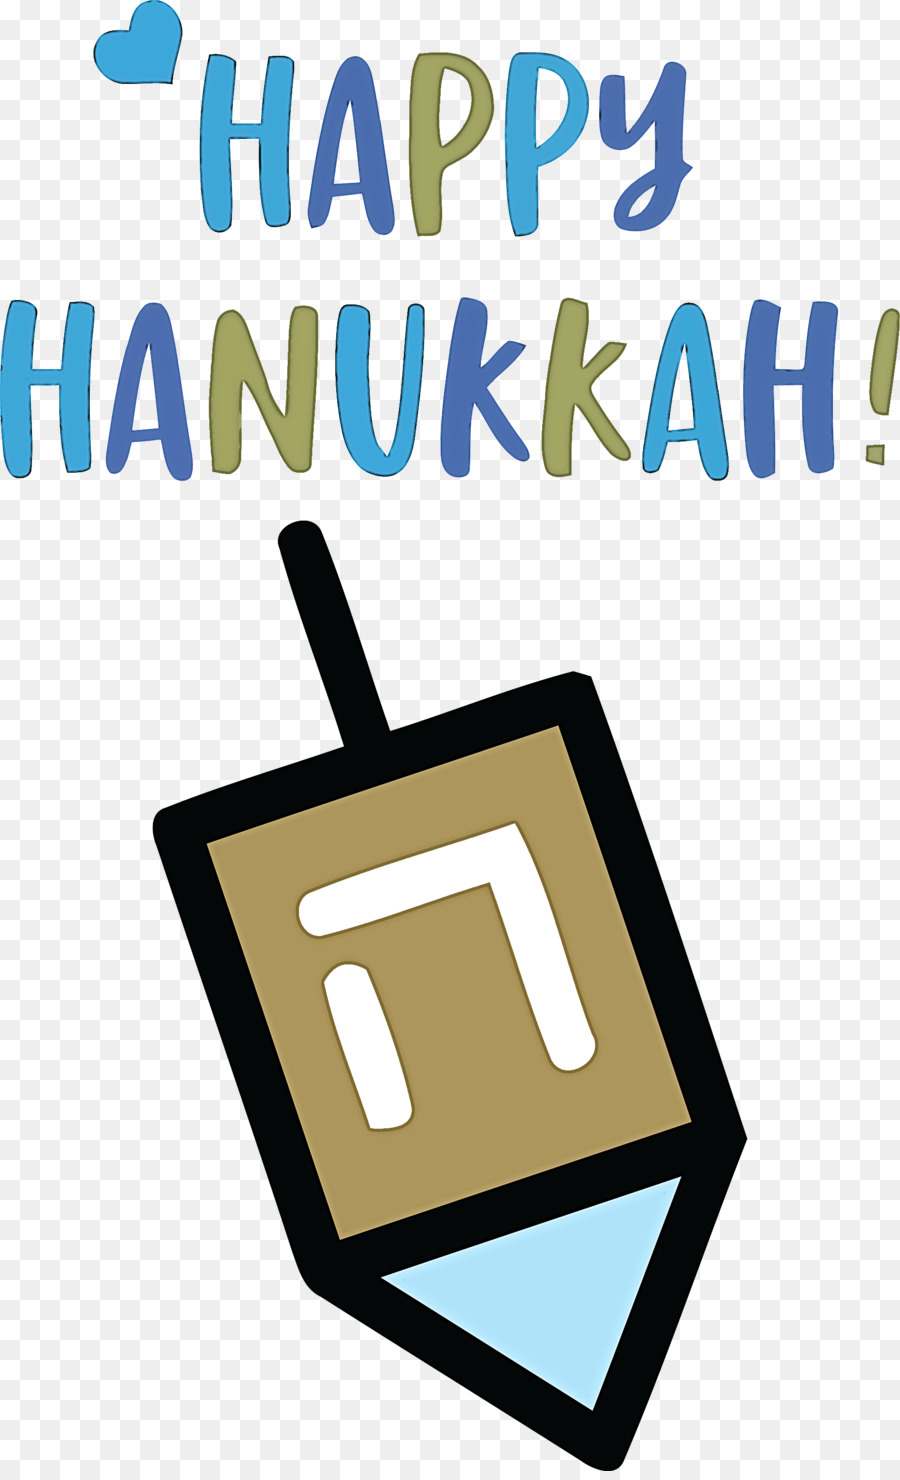 Happy Hanukkah Hanukkah Jewish festival